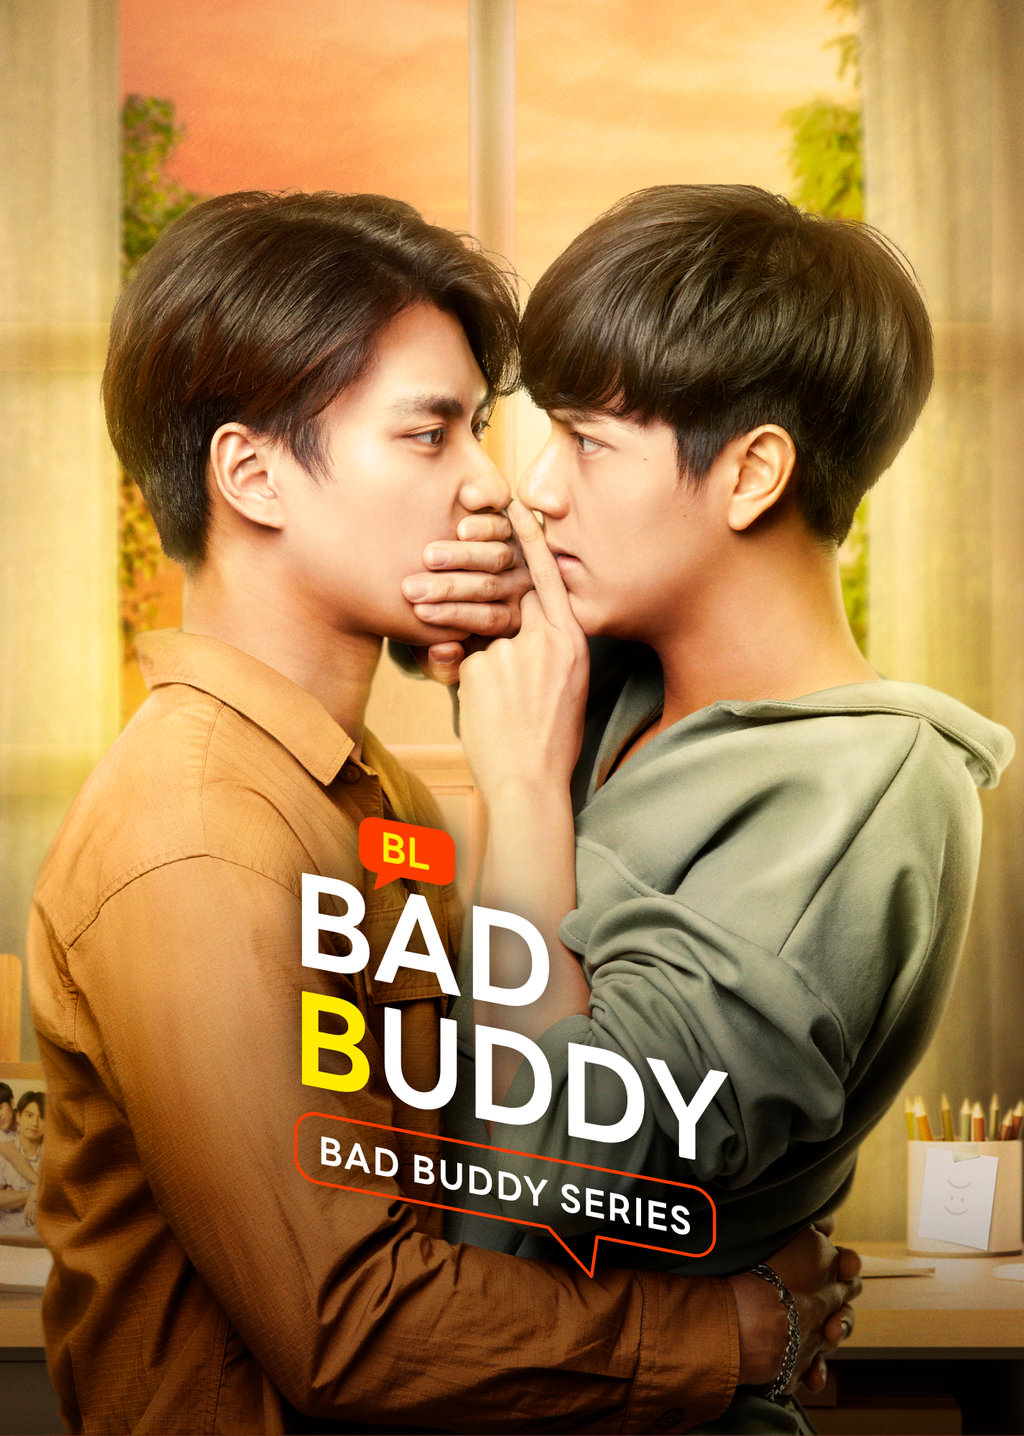 bad buddy series